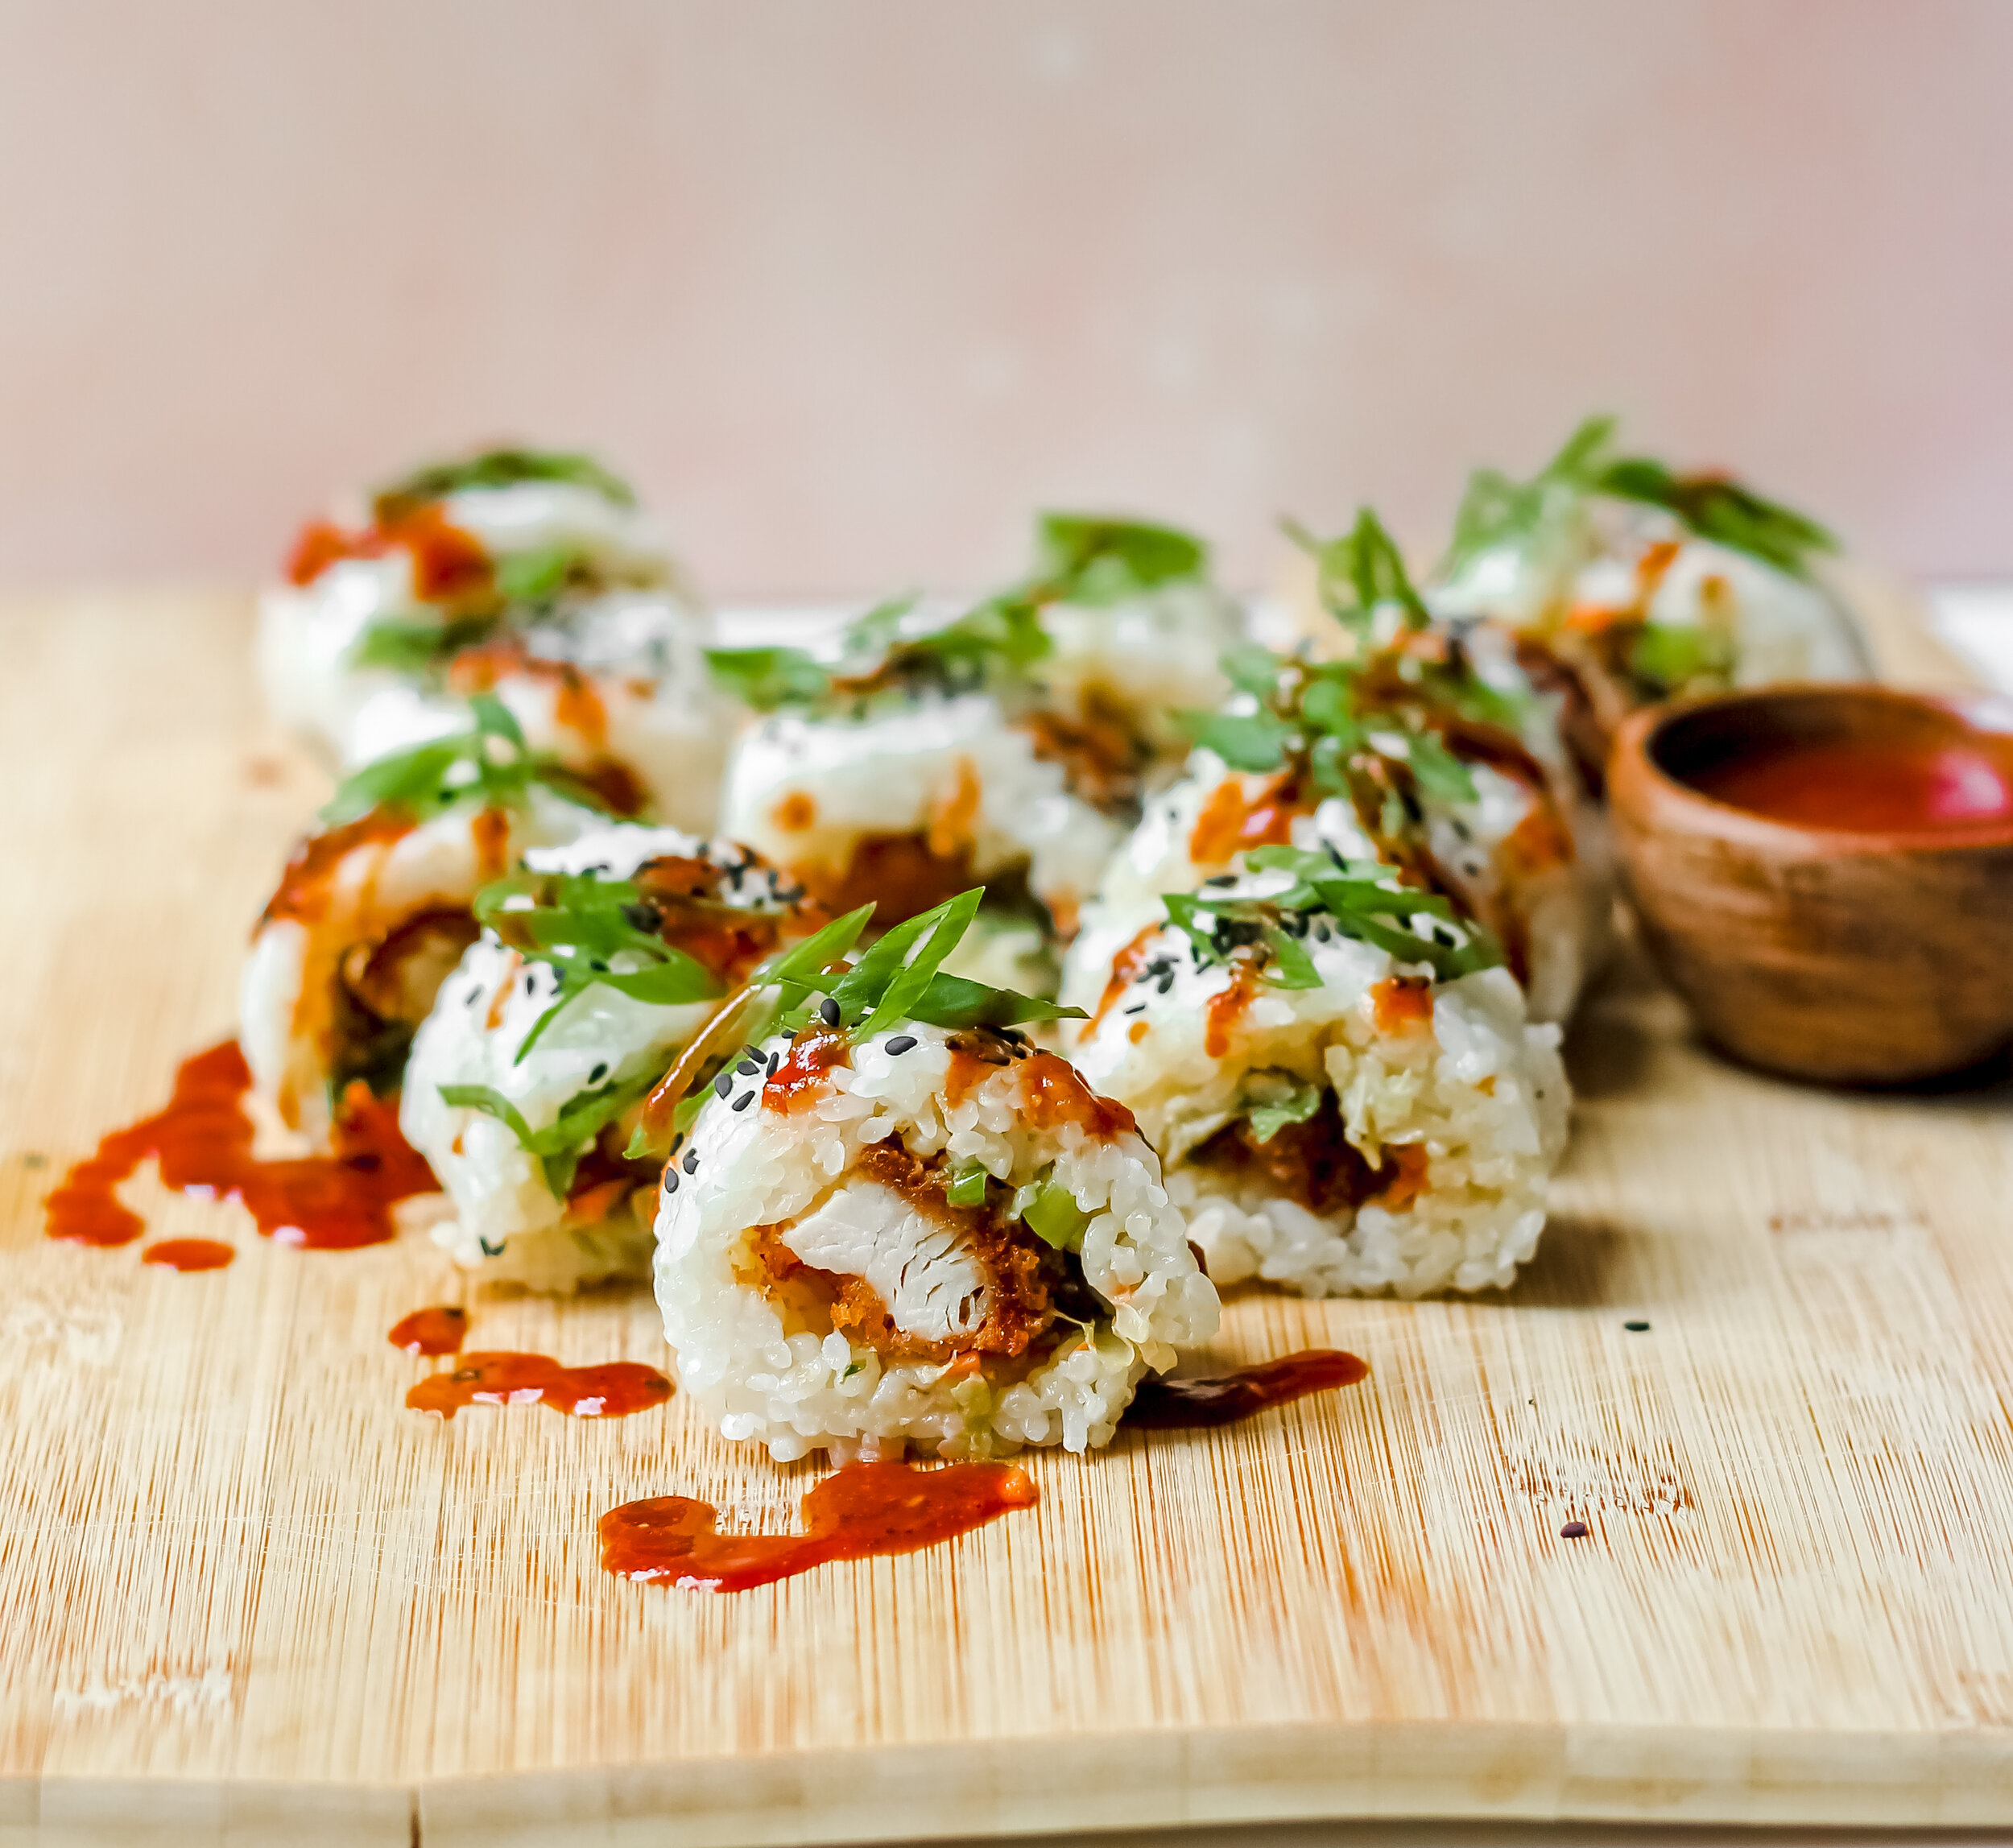 Sushi Rice and California Rolls Recipe